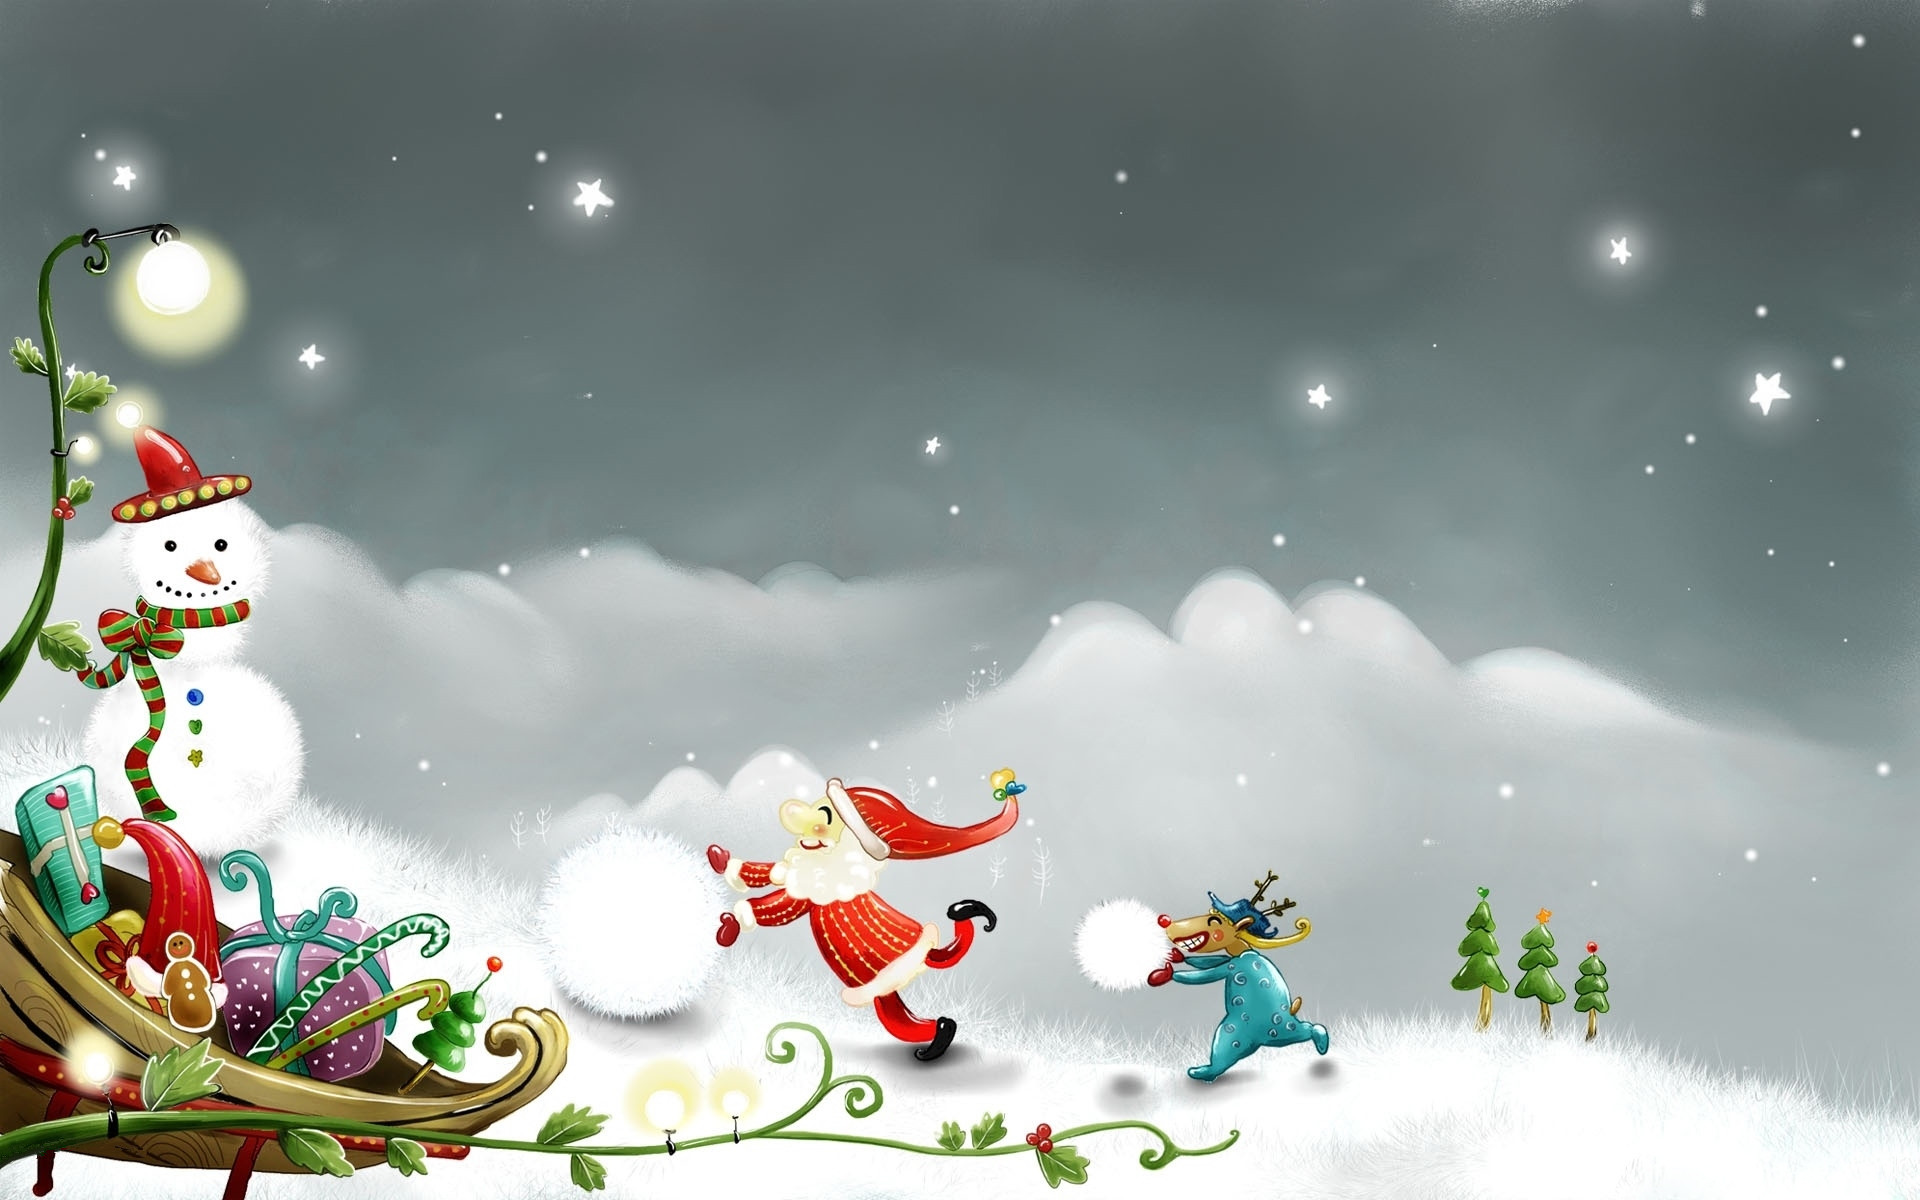 And Reindeer Making Snowman Holiday Wallpaper Hi